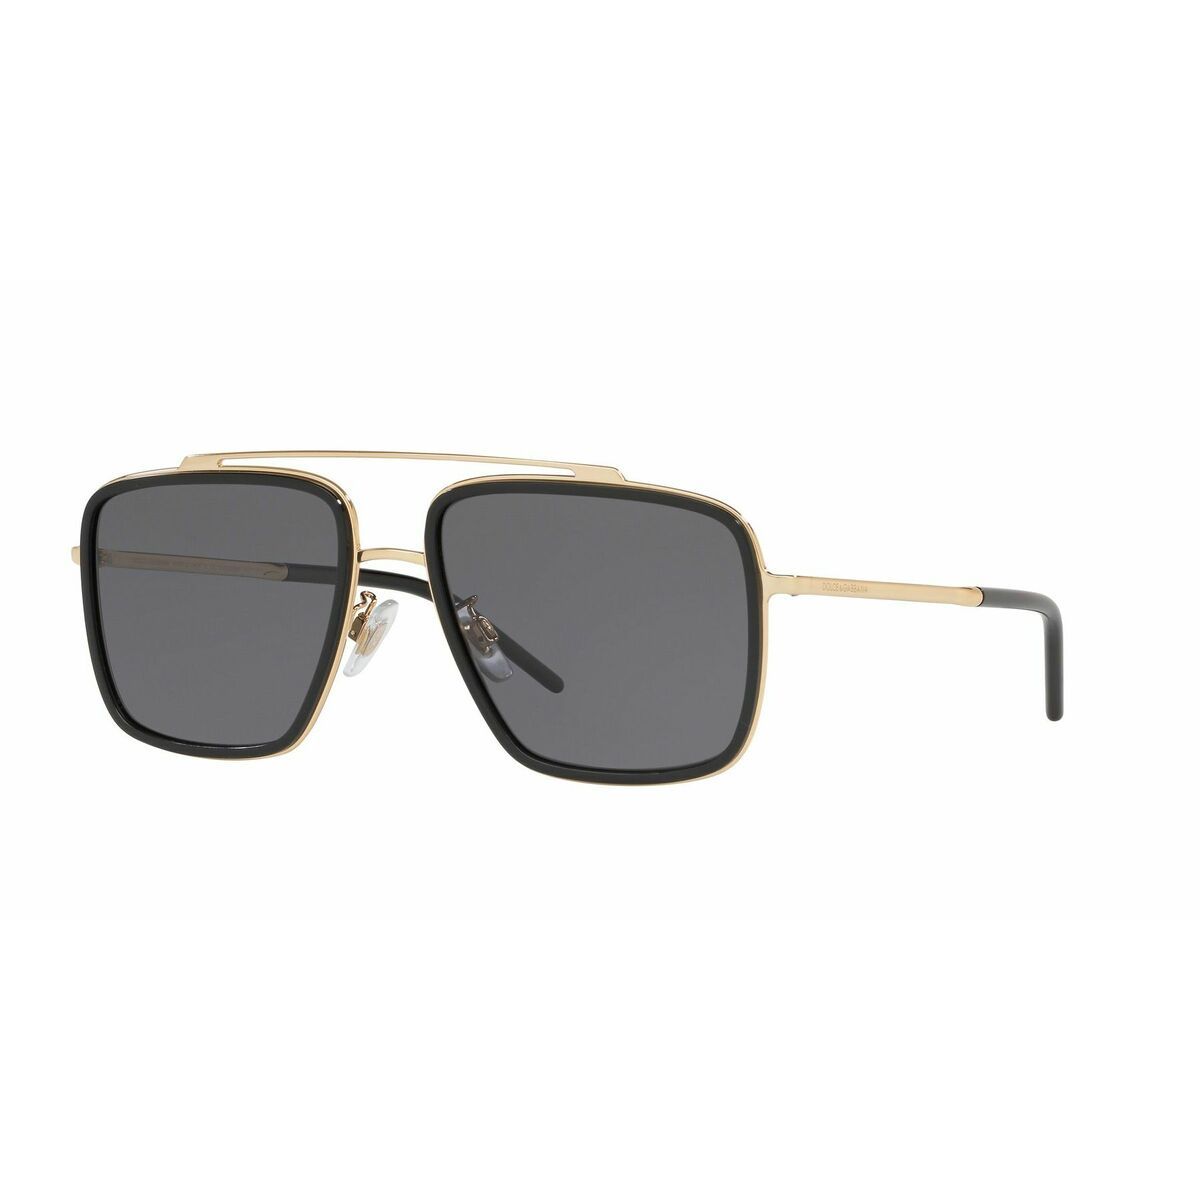 DG2220 Square Sunglasses 02 81 - size 57